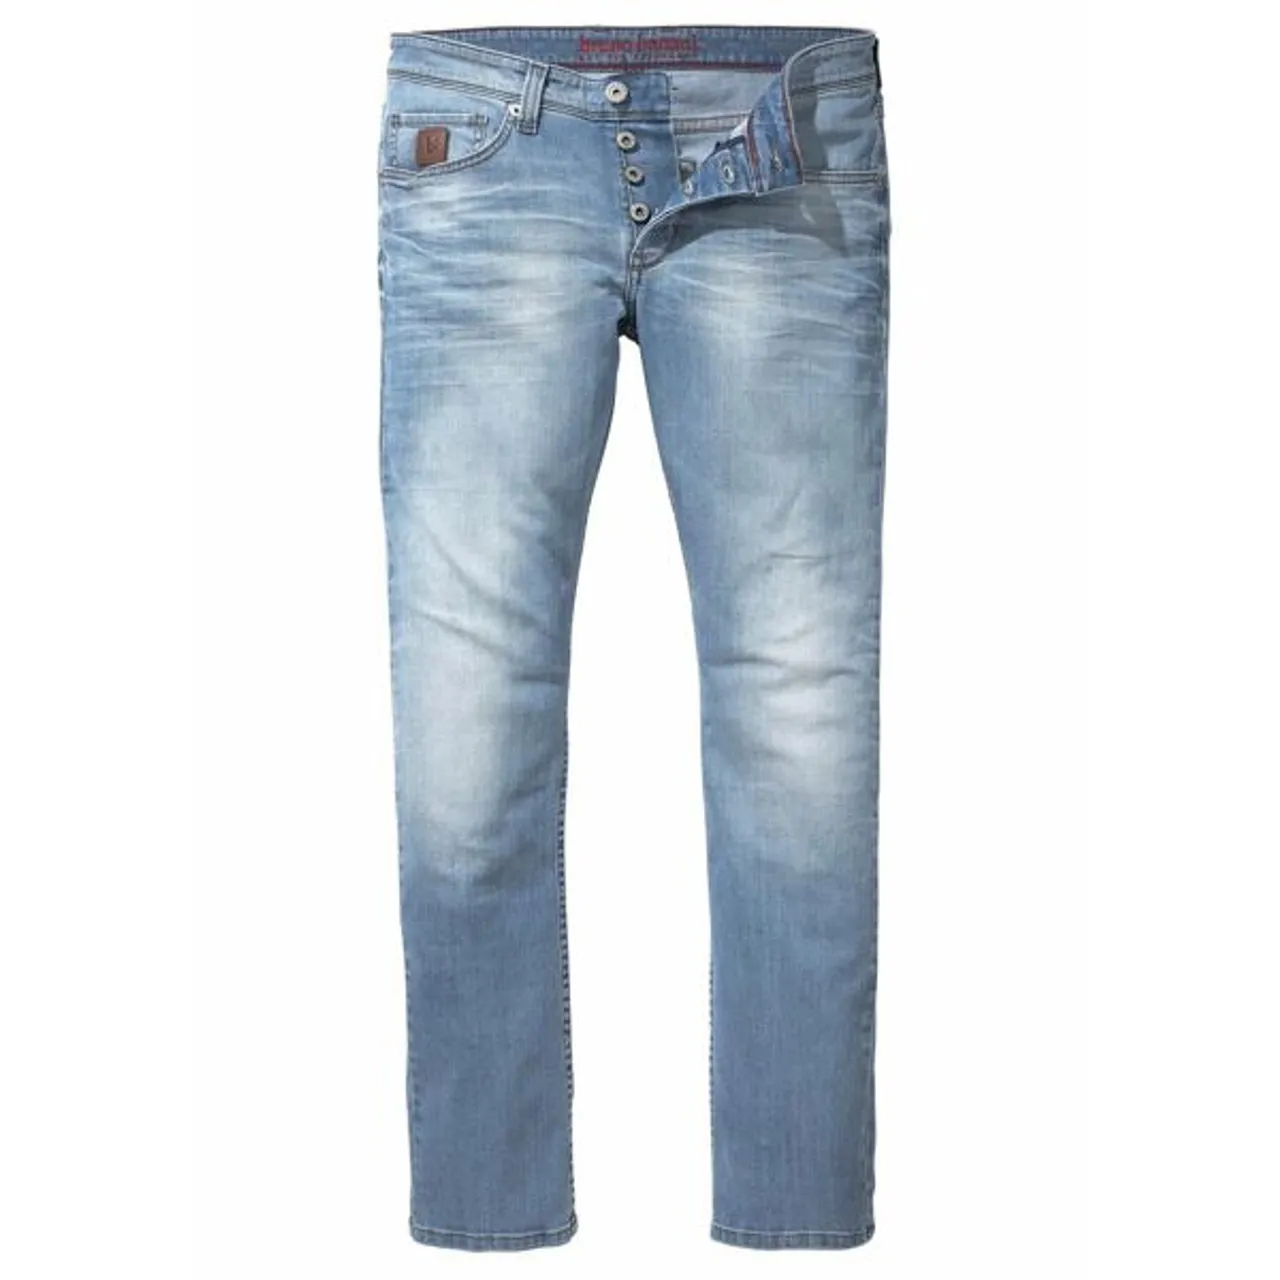 Slim-fit-Jeans BRUNO BANANI "Jimmy (Stretch)" Gr. 31, Länge 32, blau (light, blue) Herren Jeans Slim Fit